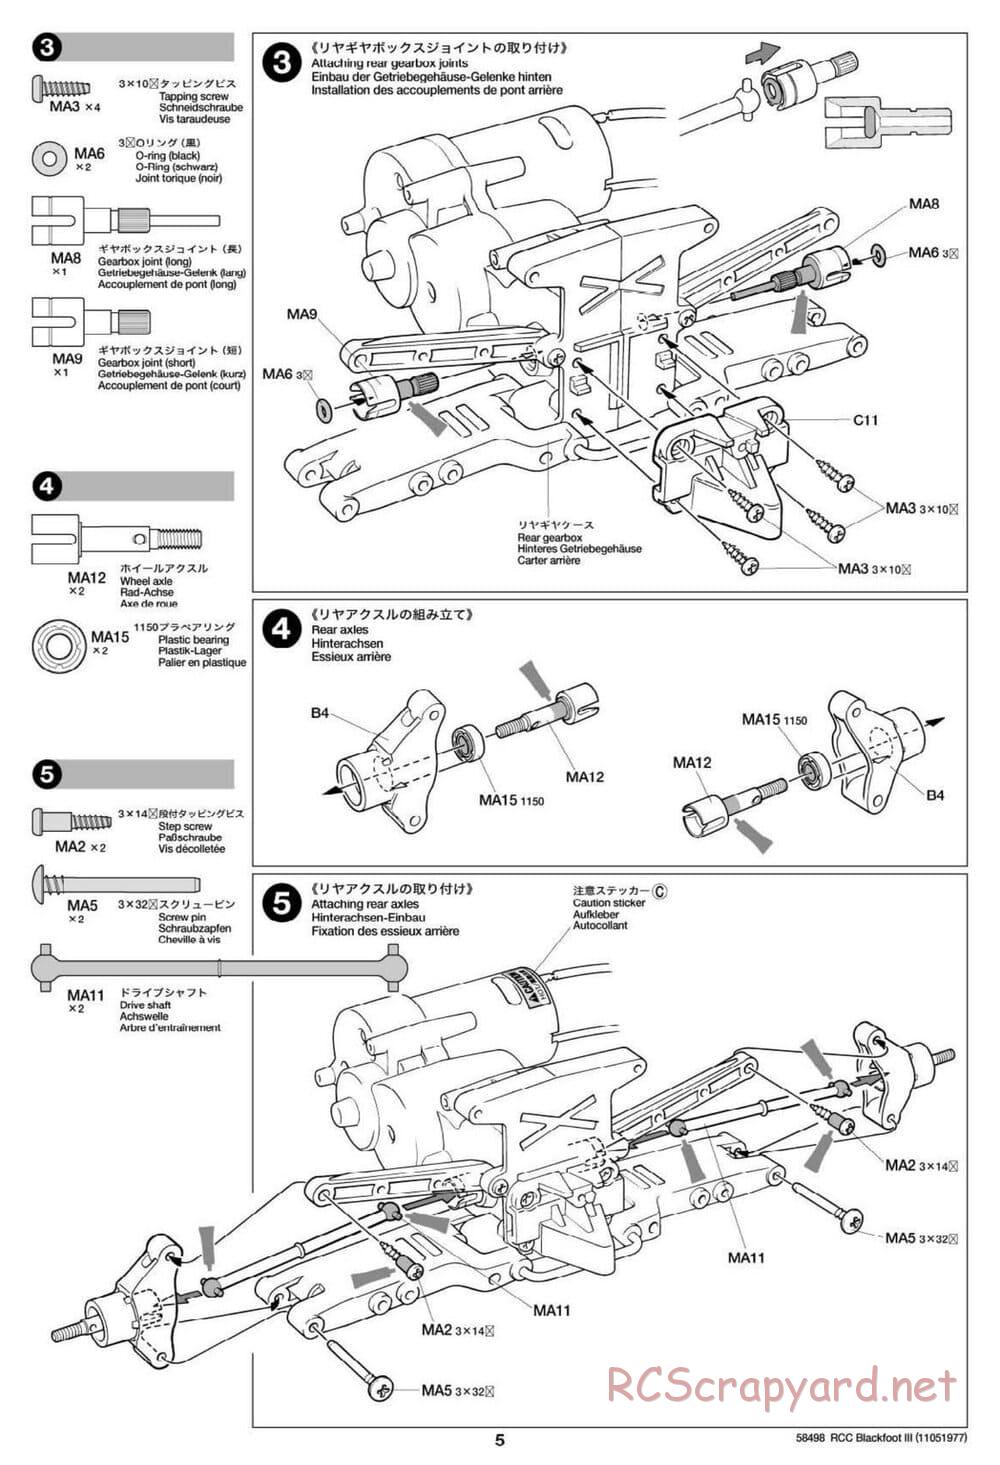 Tamiya - Blackfoot III - WT-01 Chassis - Manual - Page 5